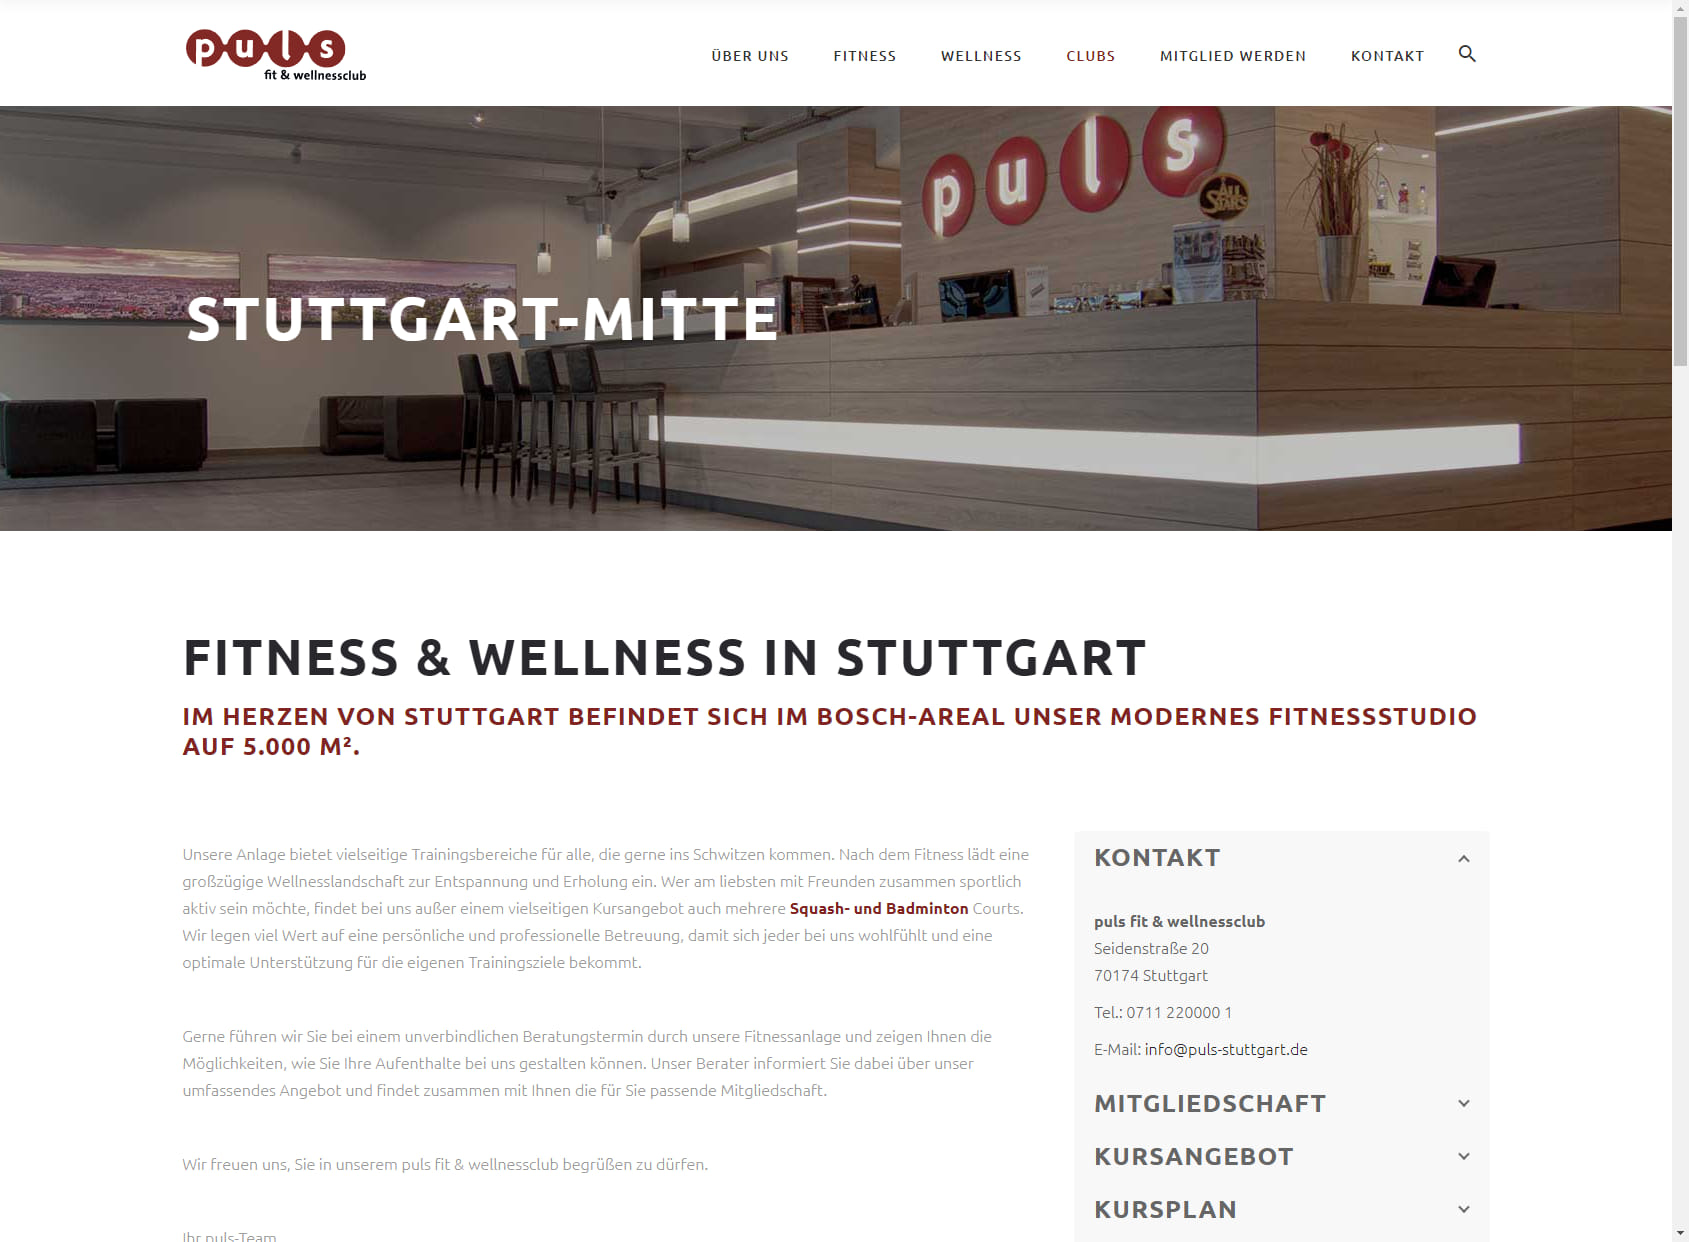 puls fit & wellnessclub / Stuttgart-Mitte